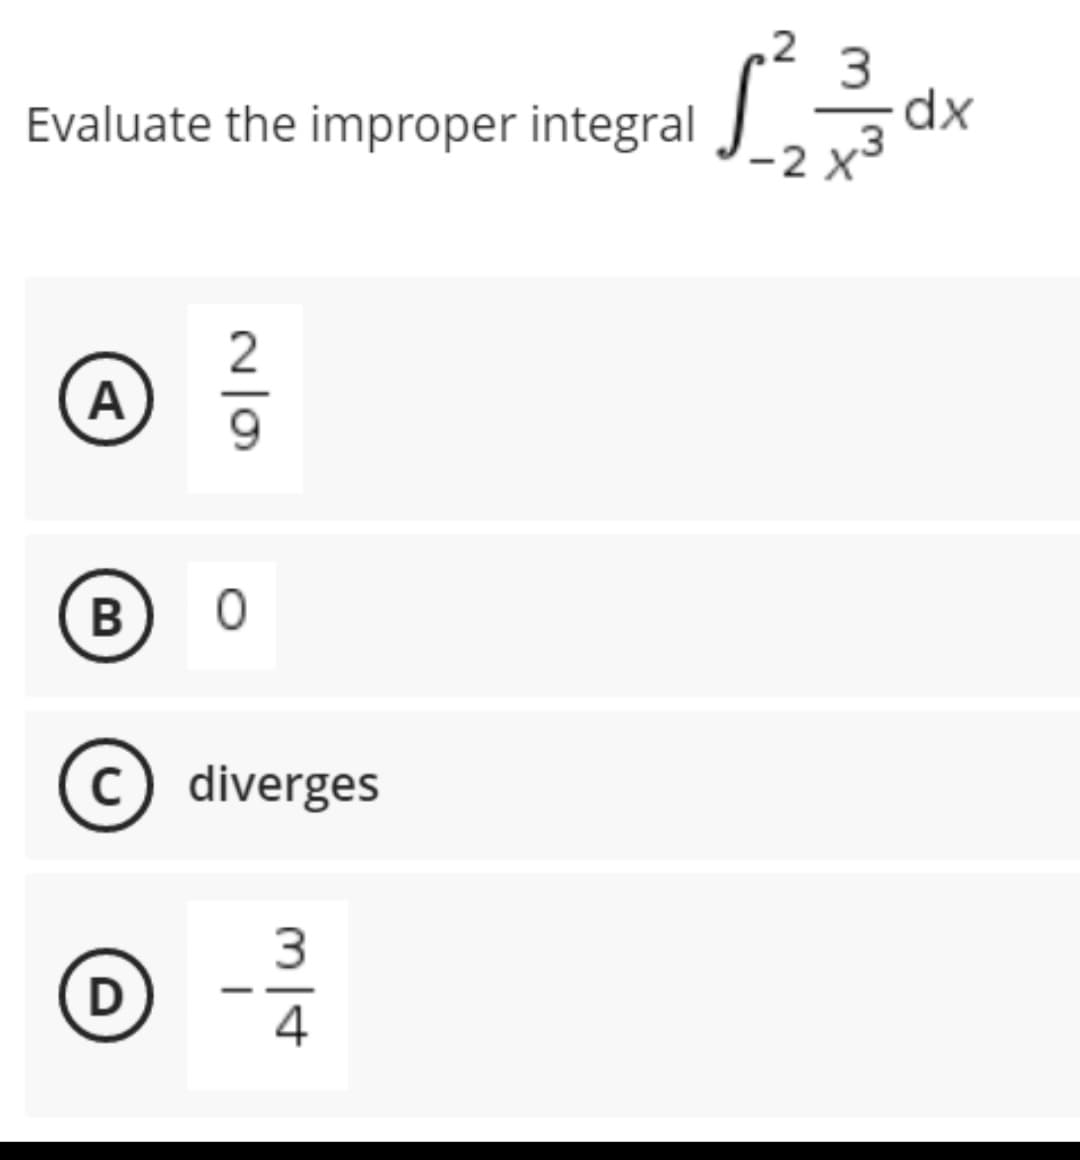 Evaluate the improper integral
A
9
B
C diverges
D)
3
4
1²233³3³3
dx